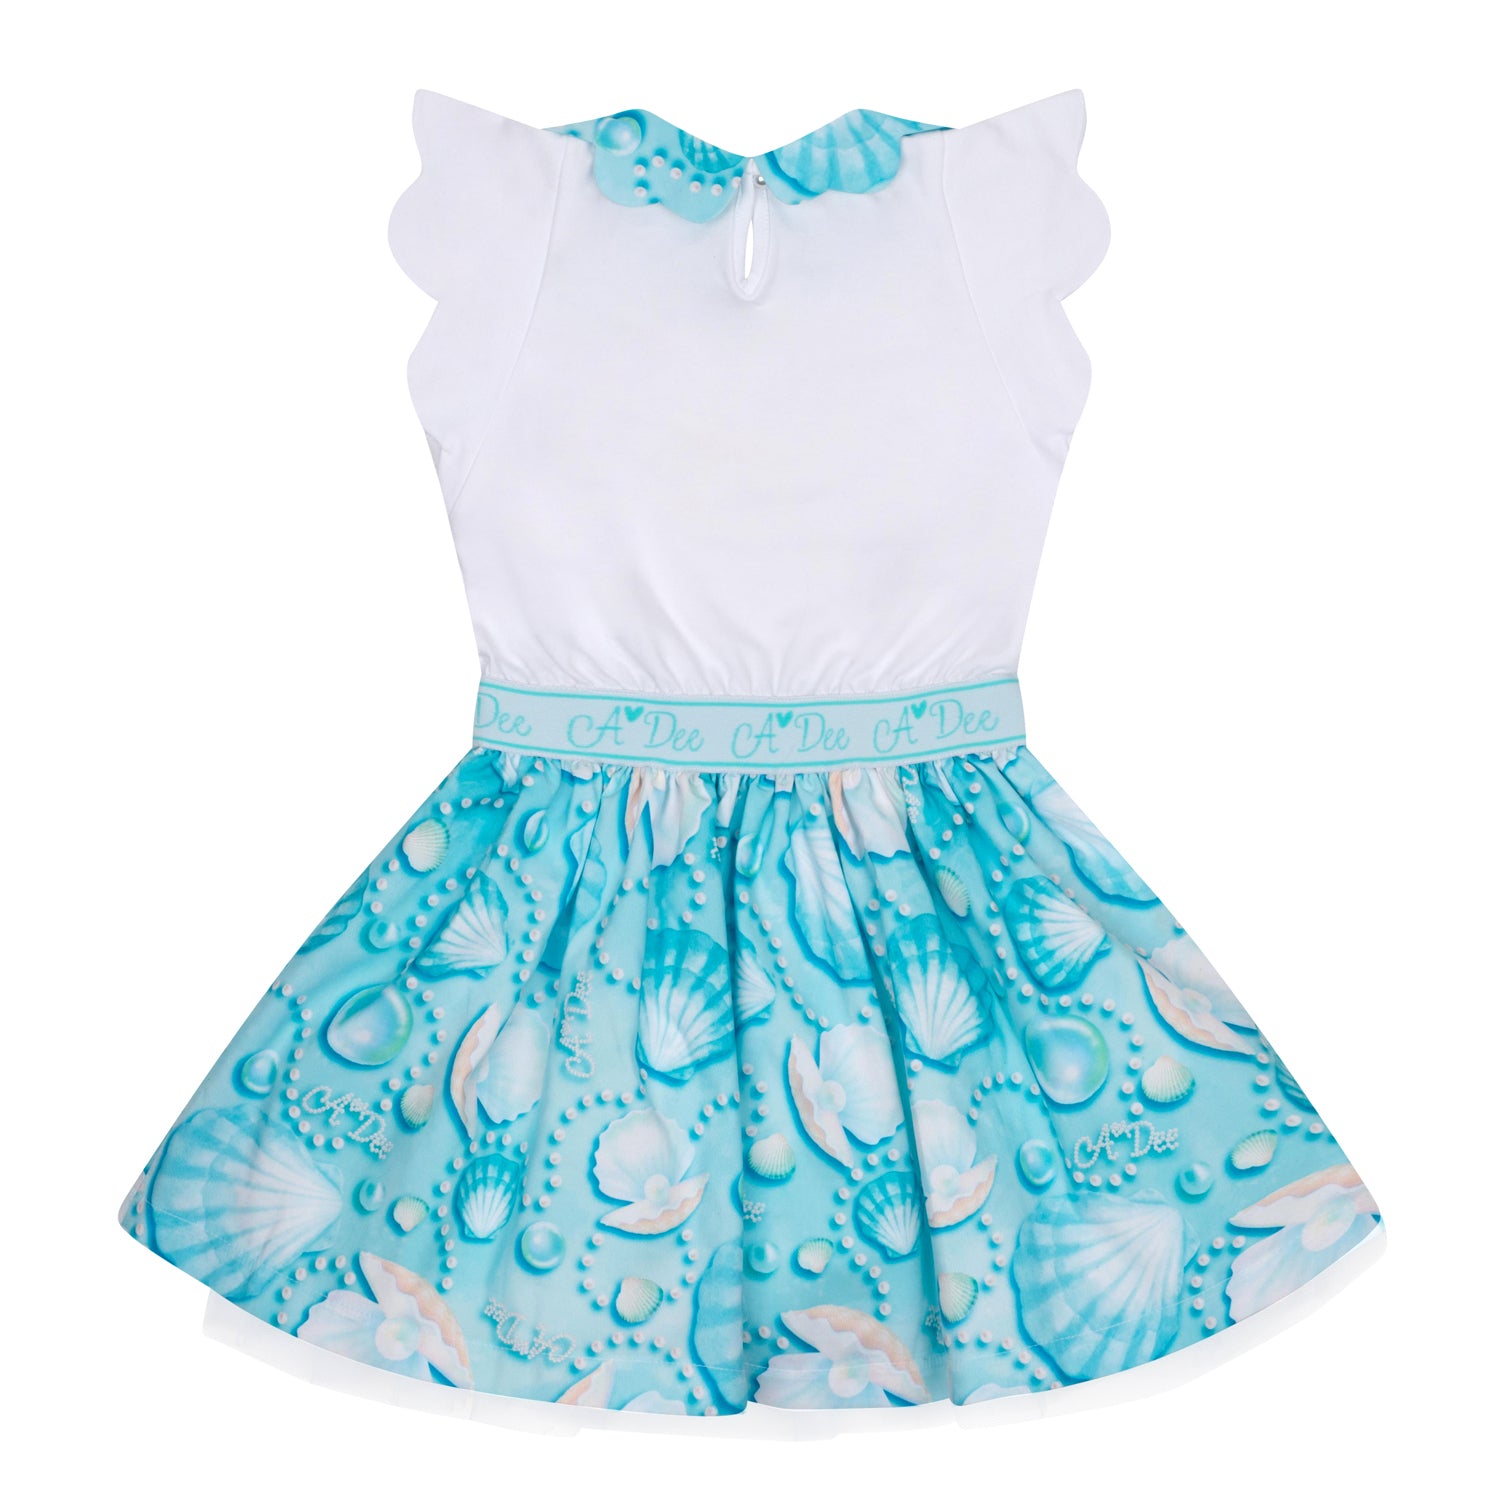 Aruba Blue Shell Print Dress